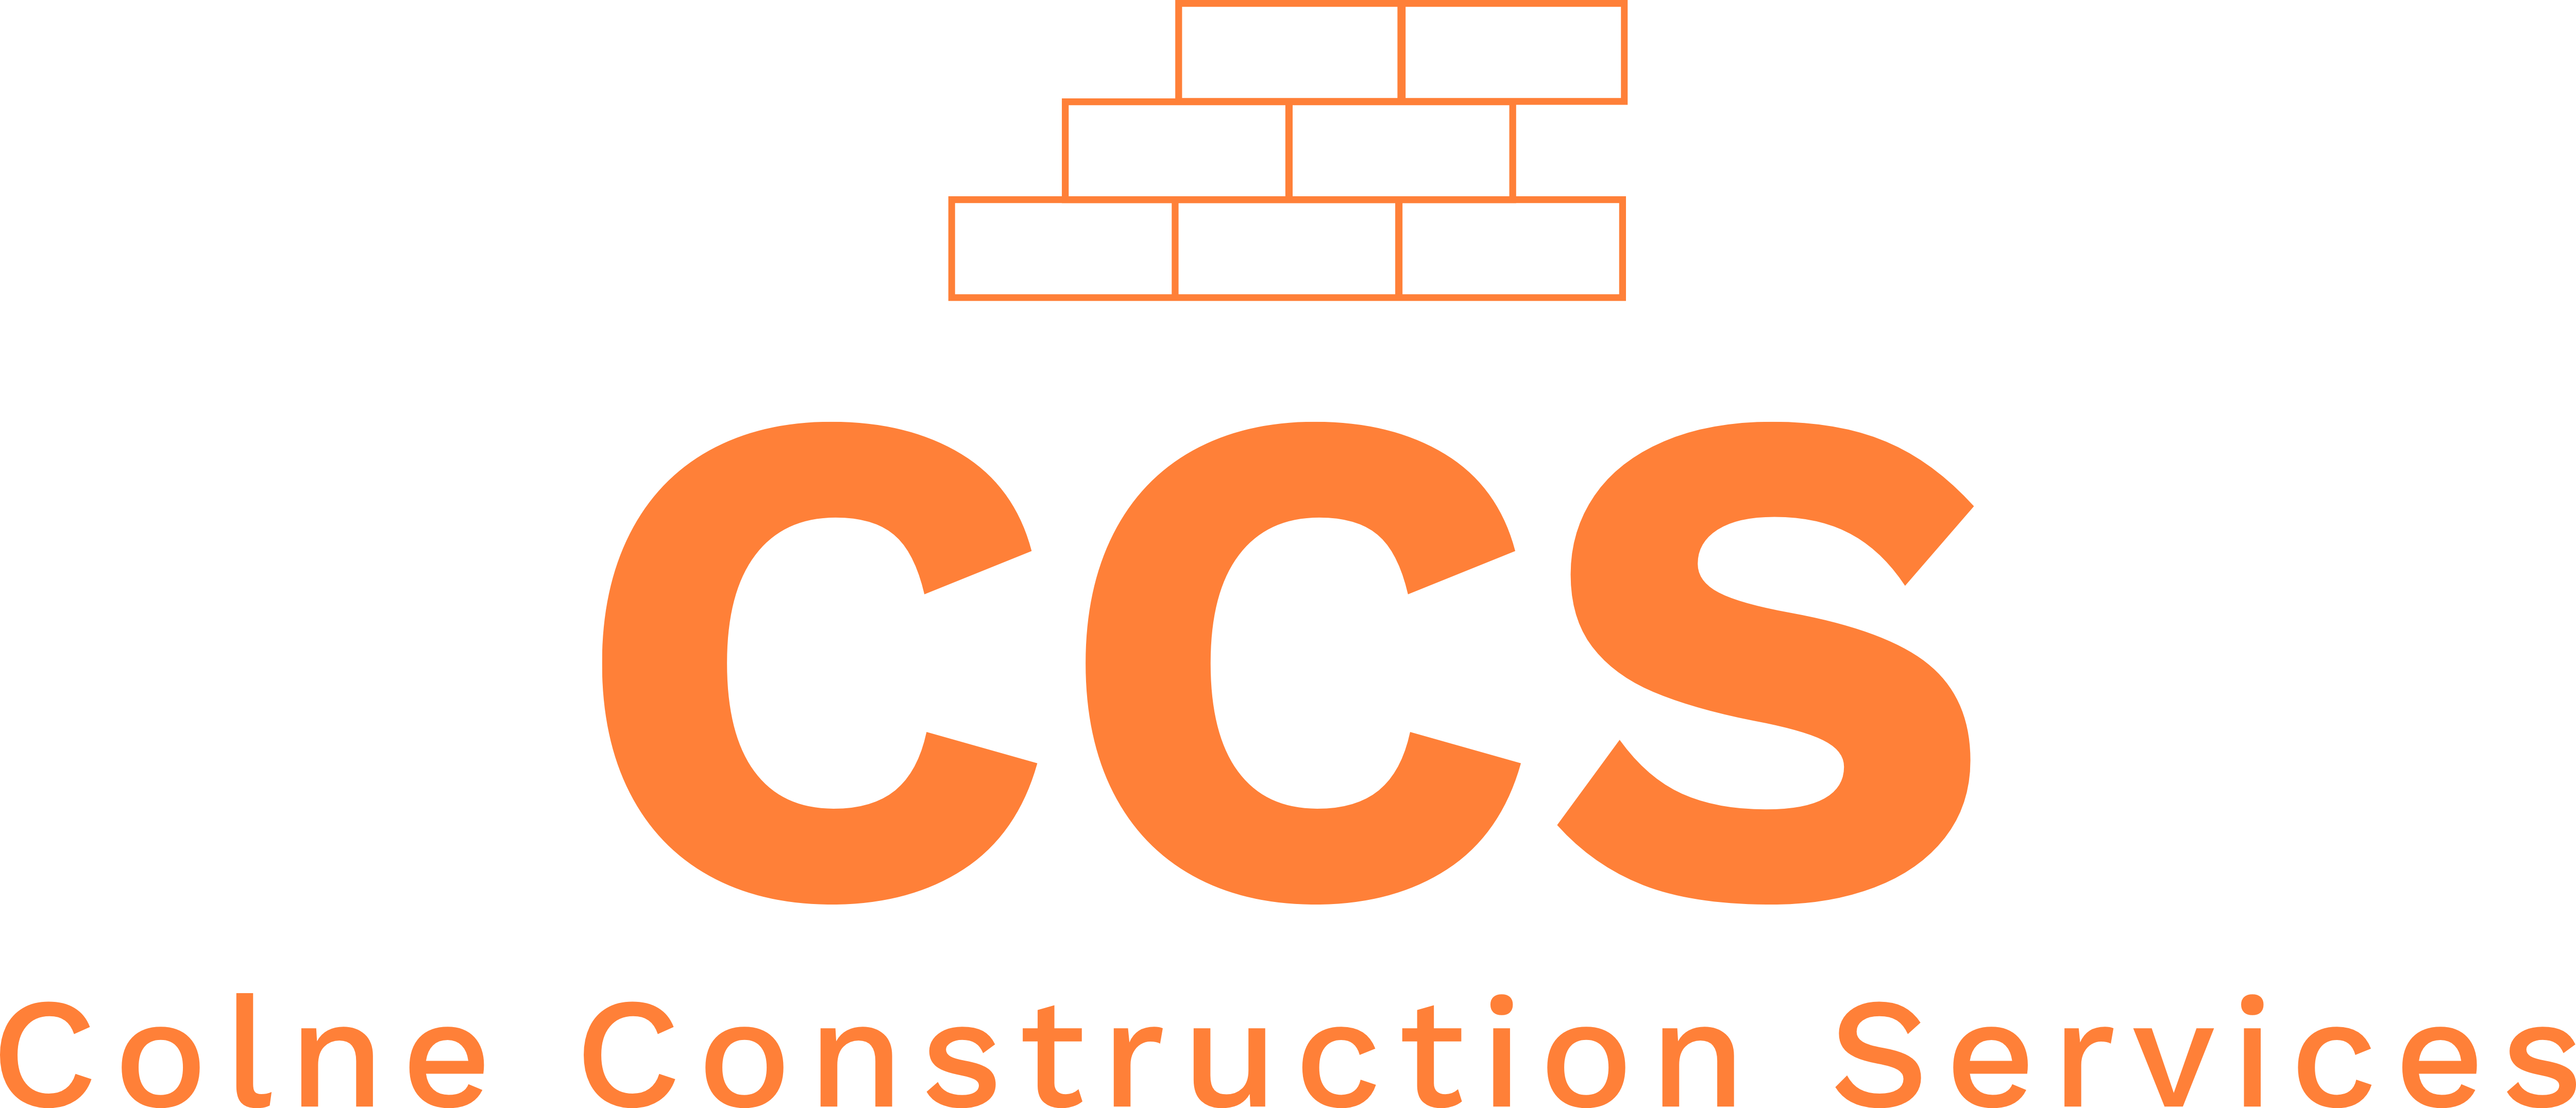 Colne Construction Services